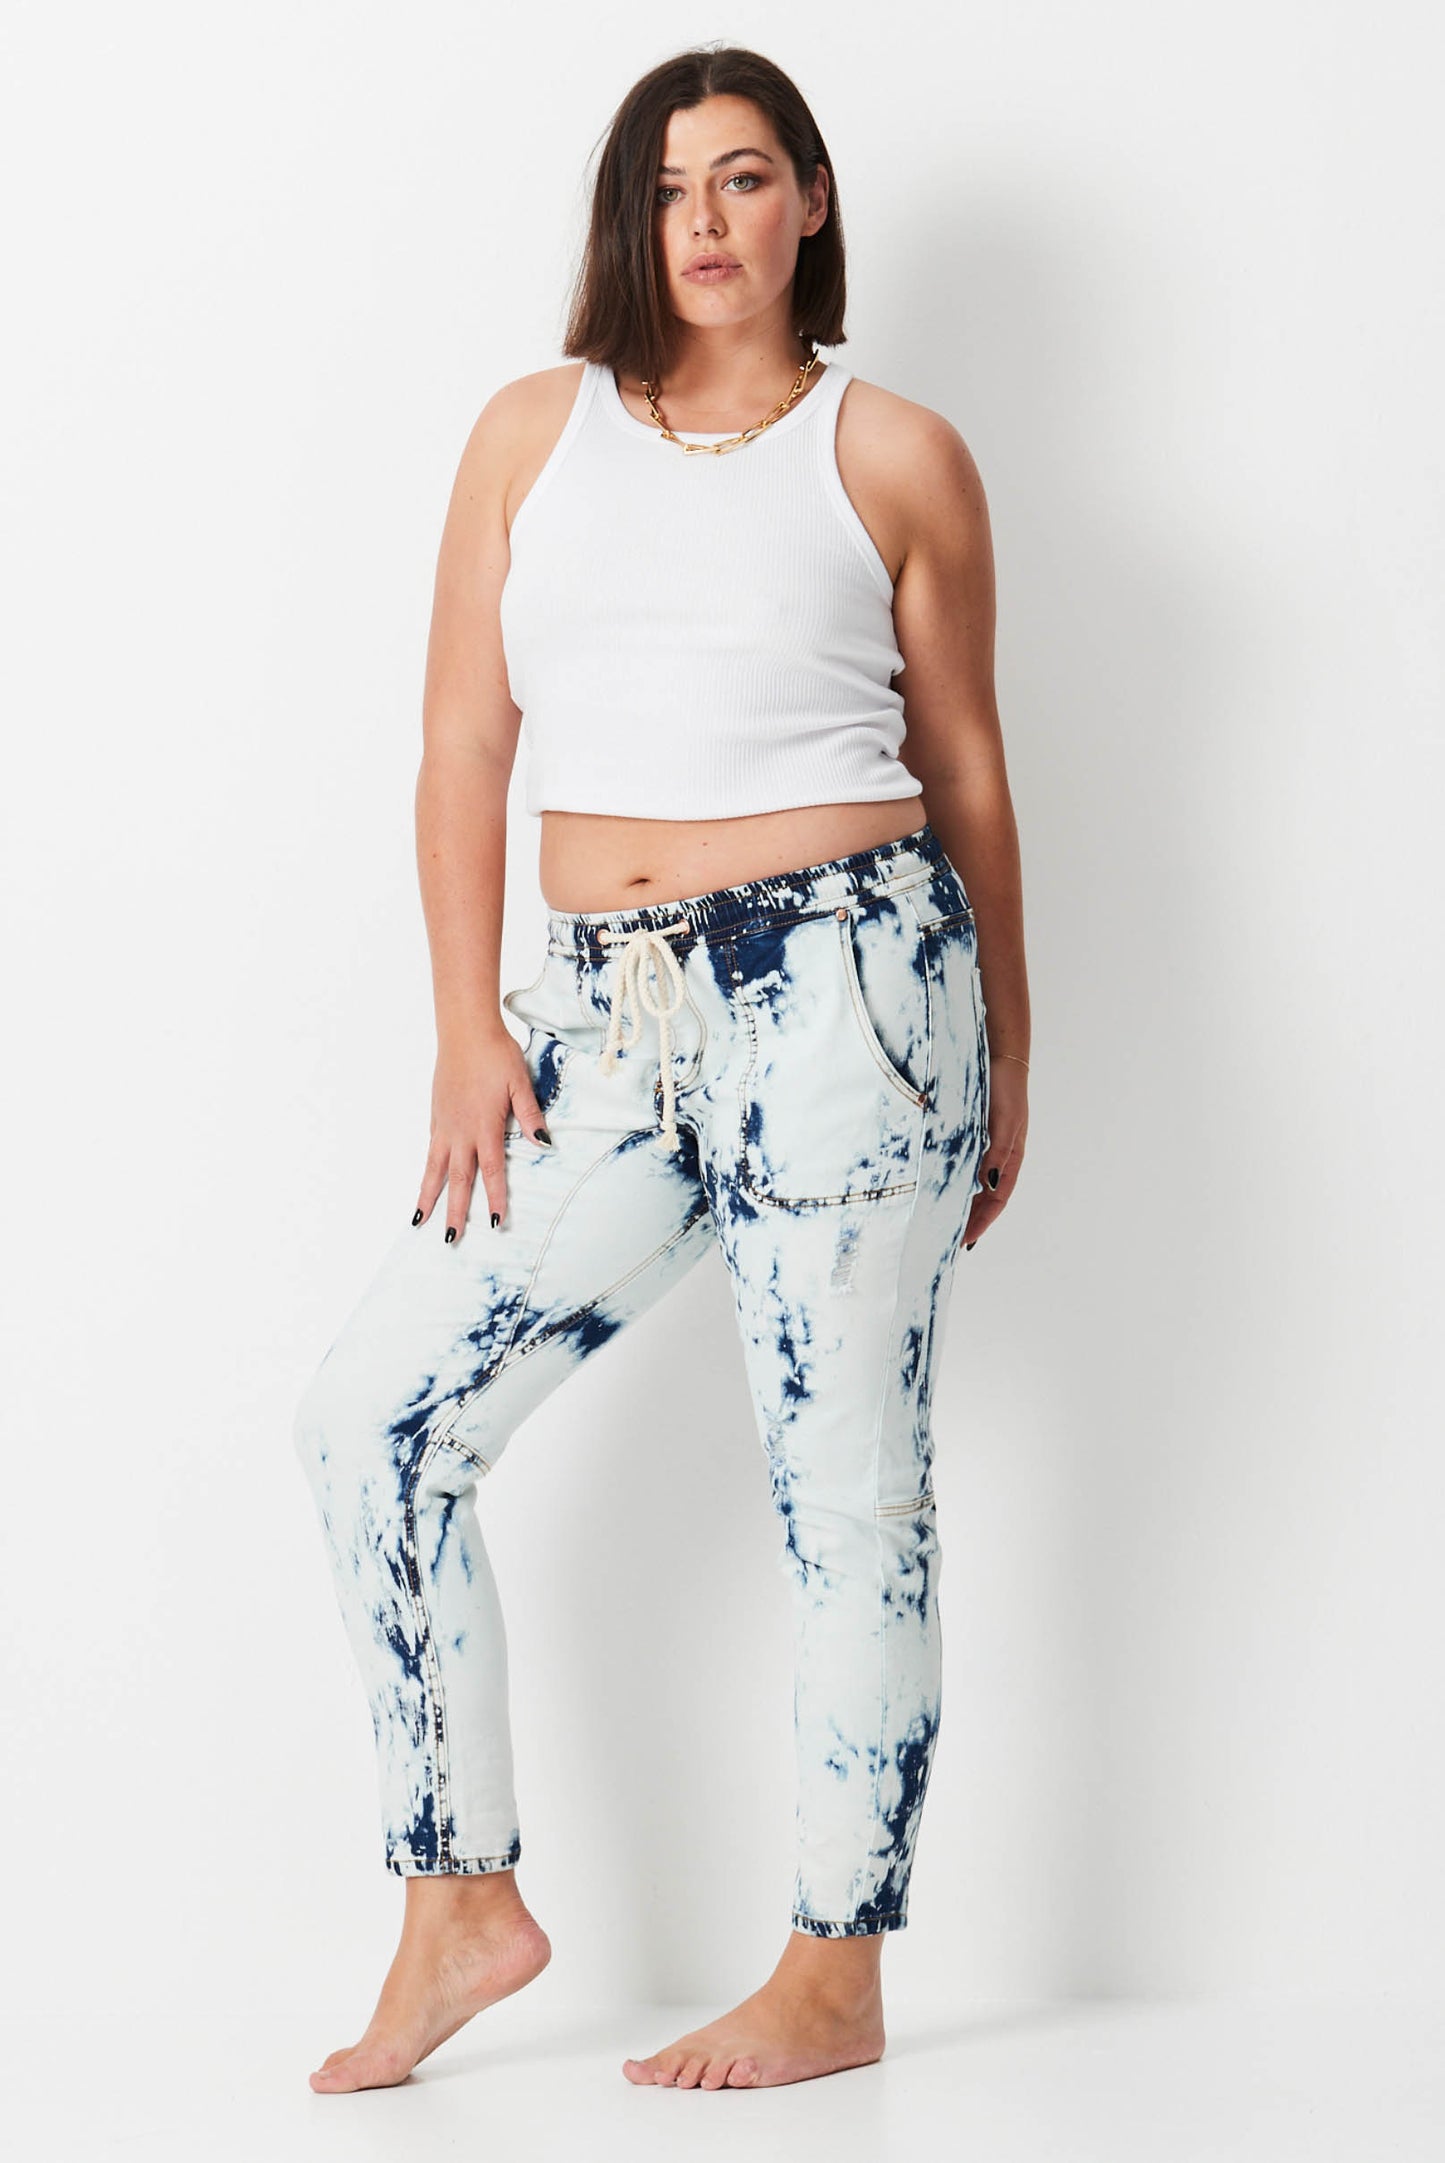 Model wears plus size white jeans with shibori wash